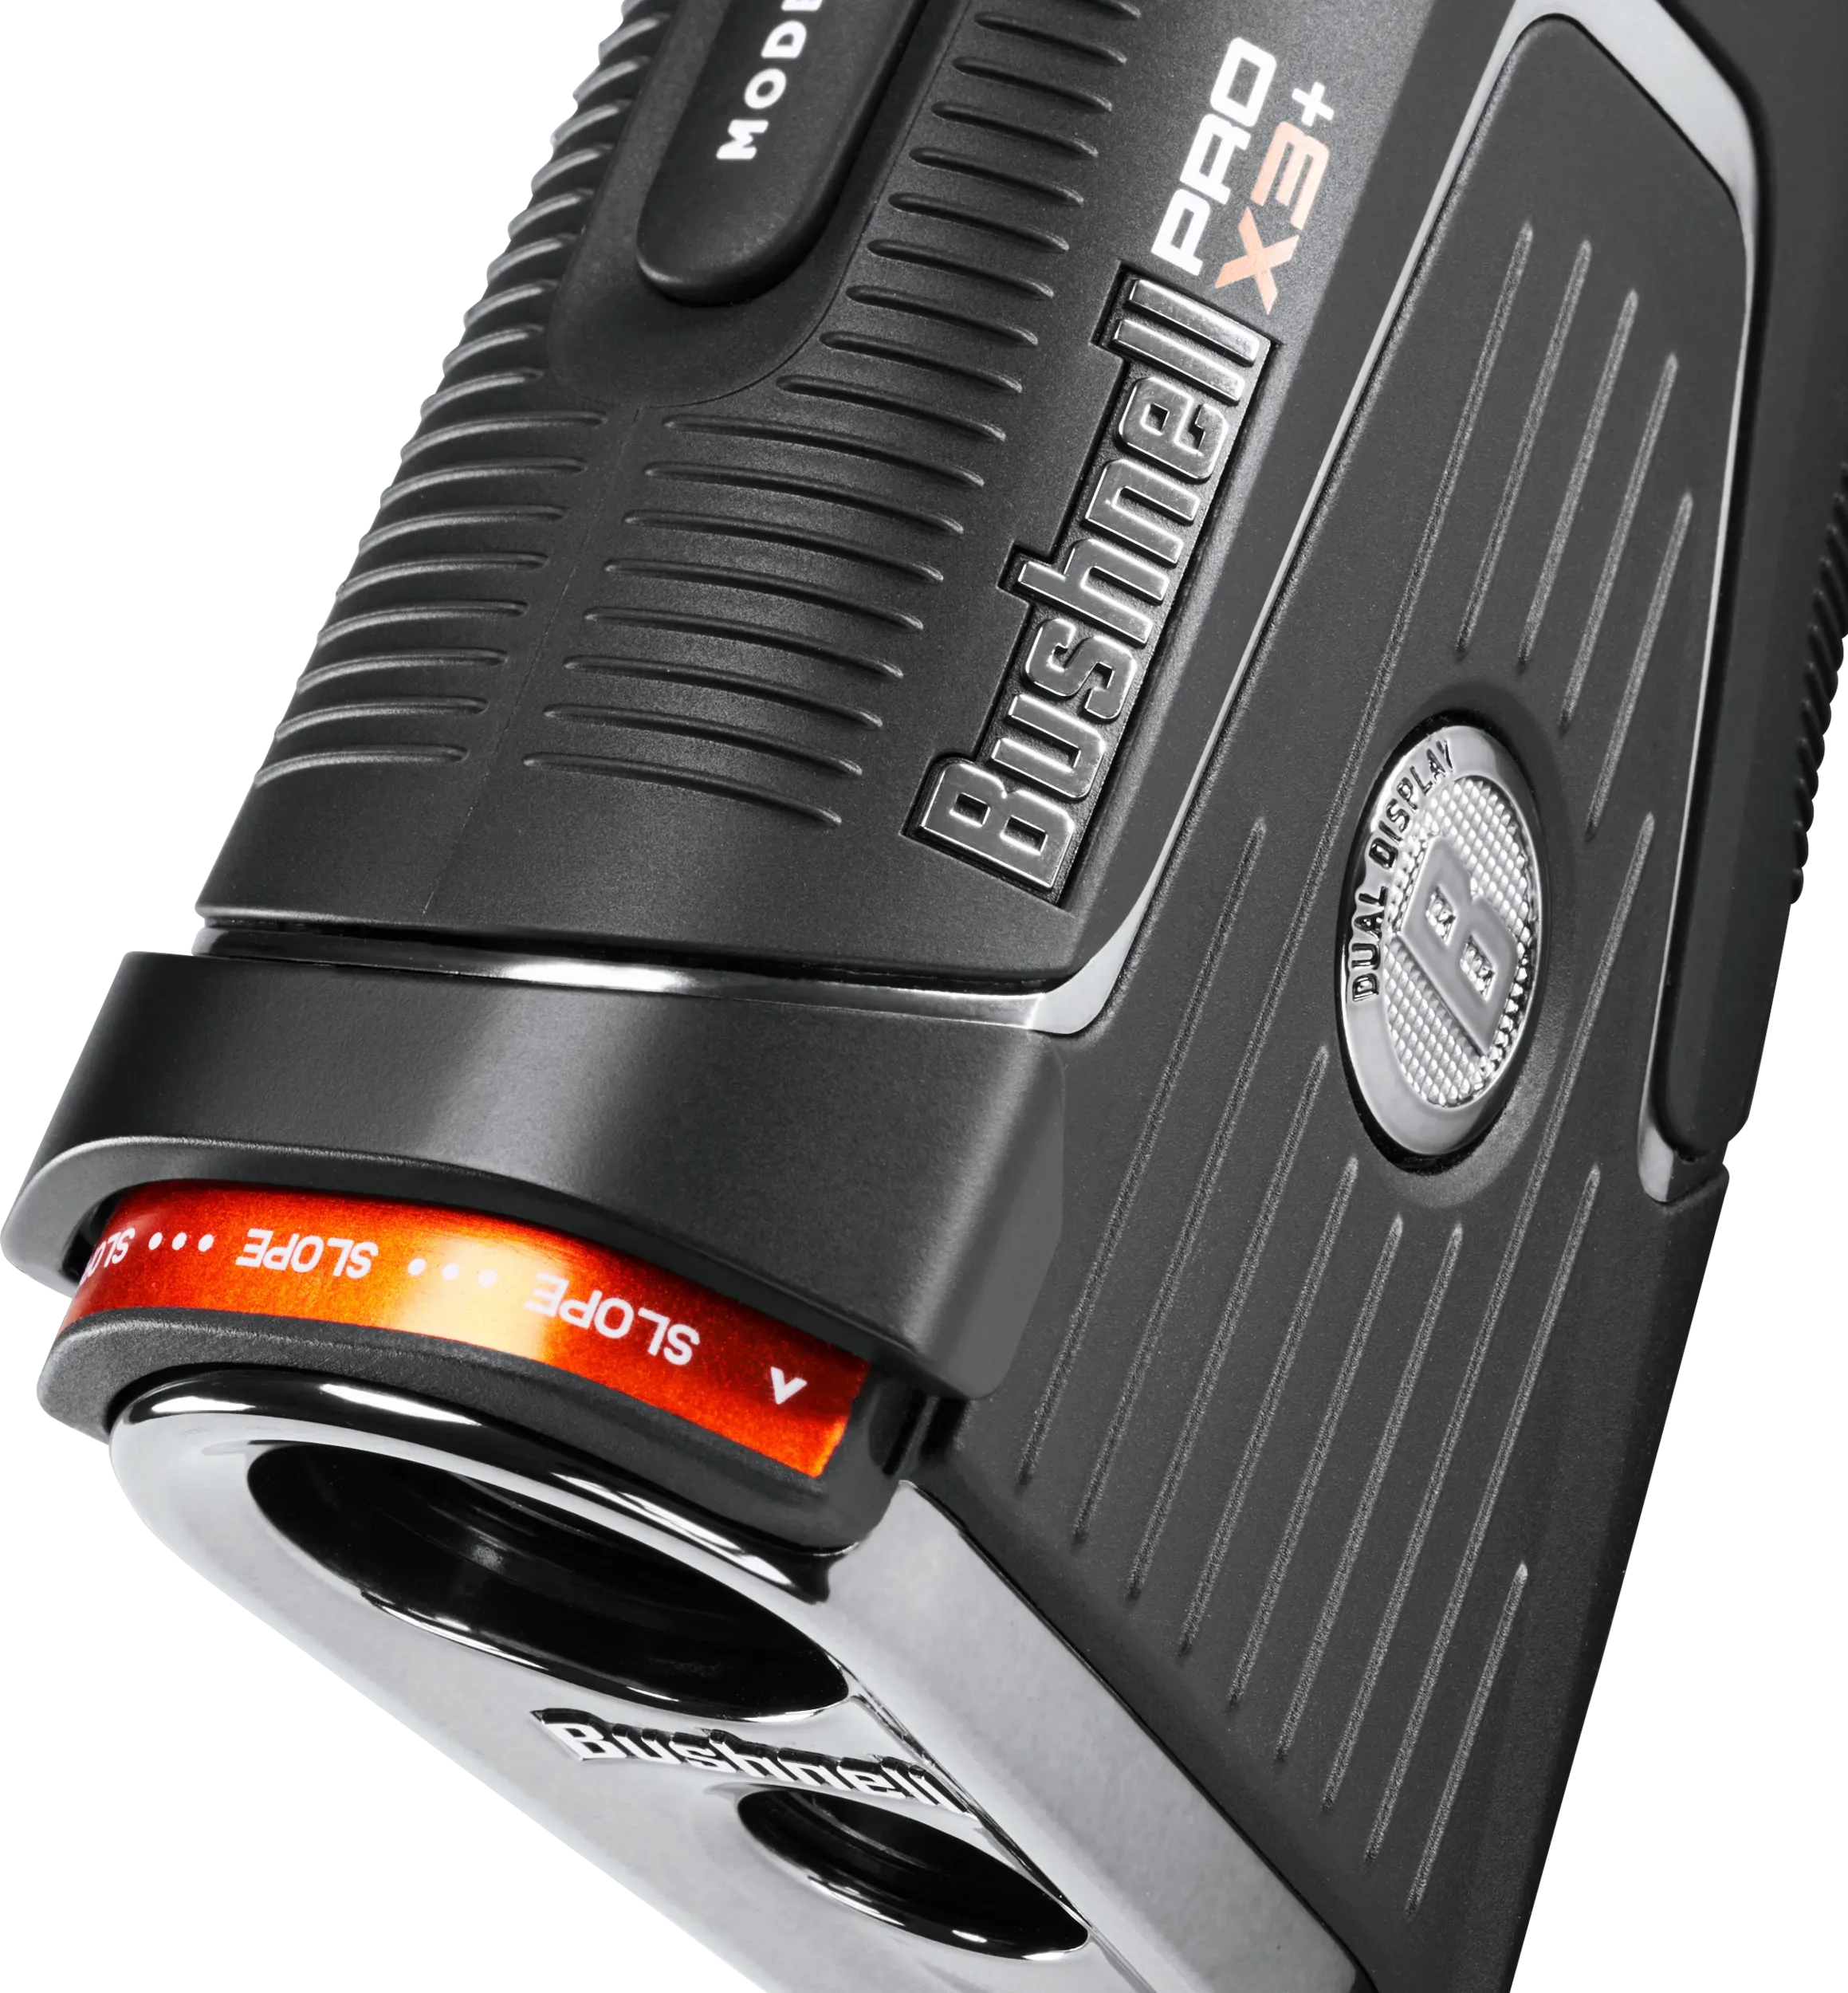 Bushnell PRO X3+ Laser Entfernungsmesser